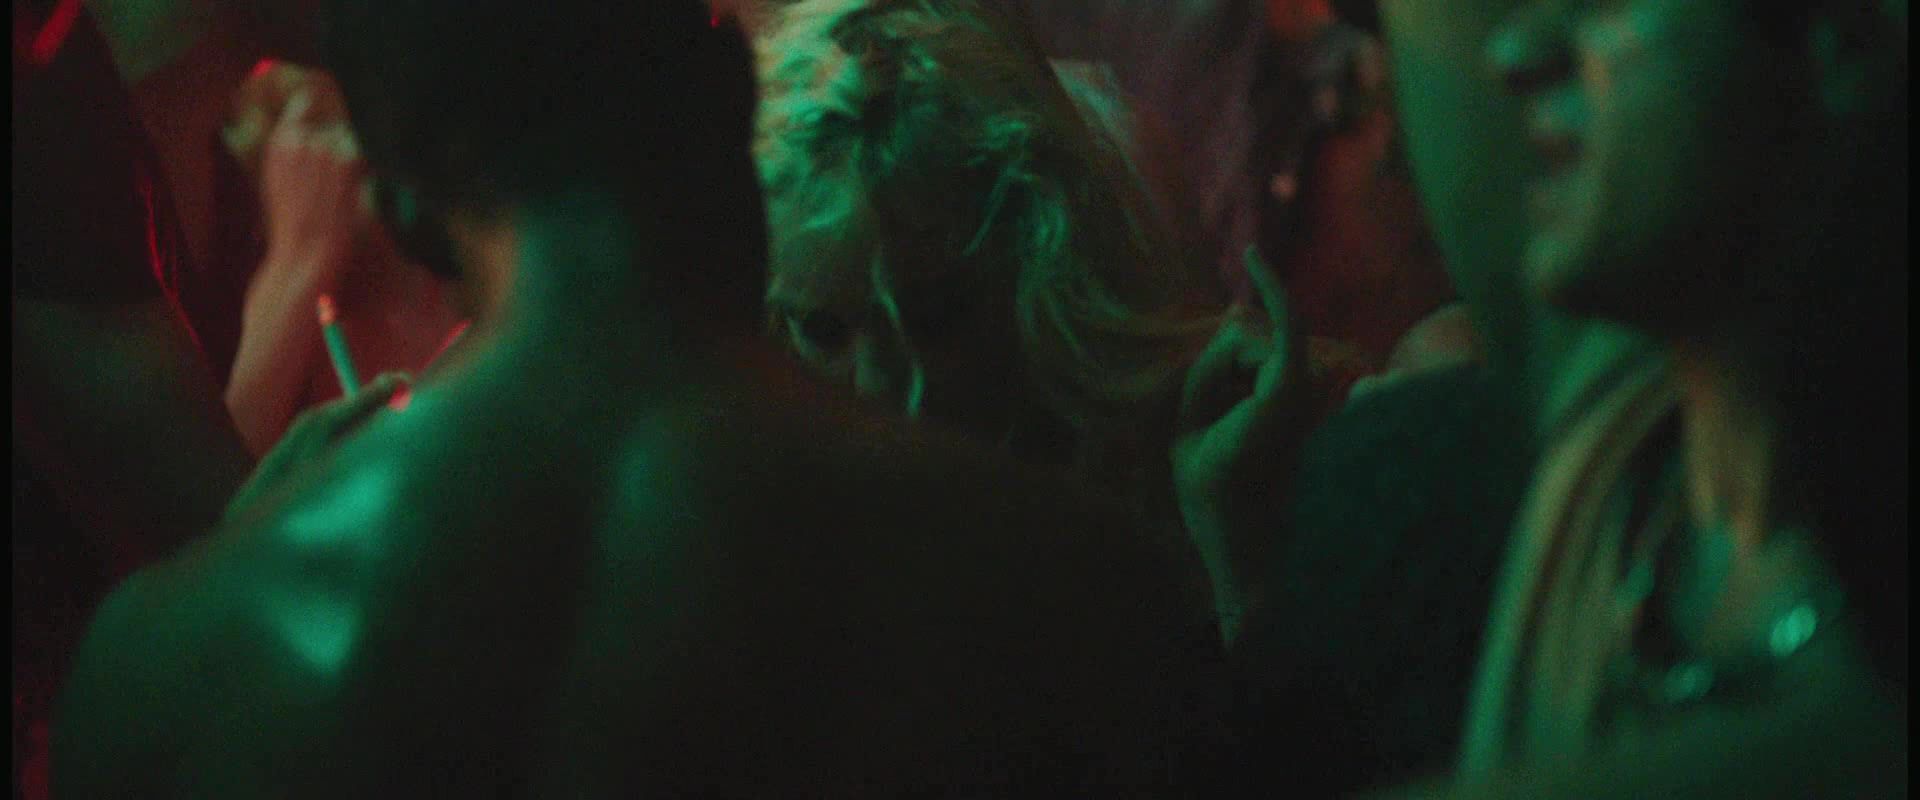 Cougar Topless actress Morgan Saylor, India Menuez - White Girl (2016) Sex Tape